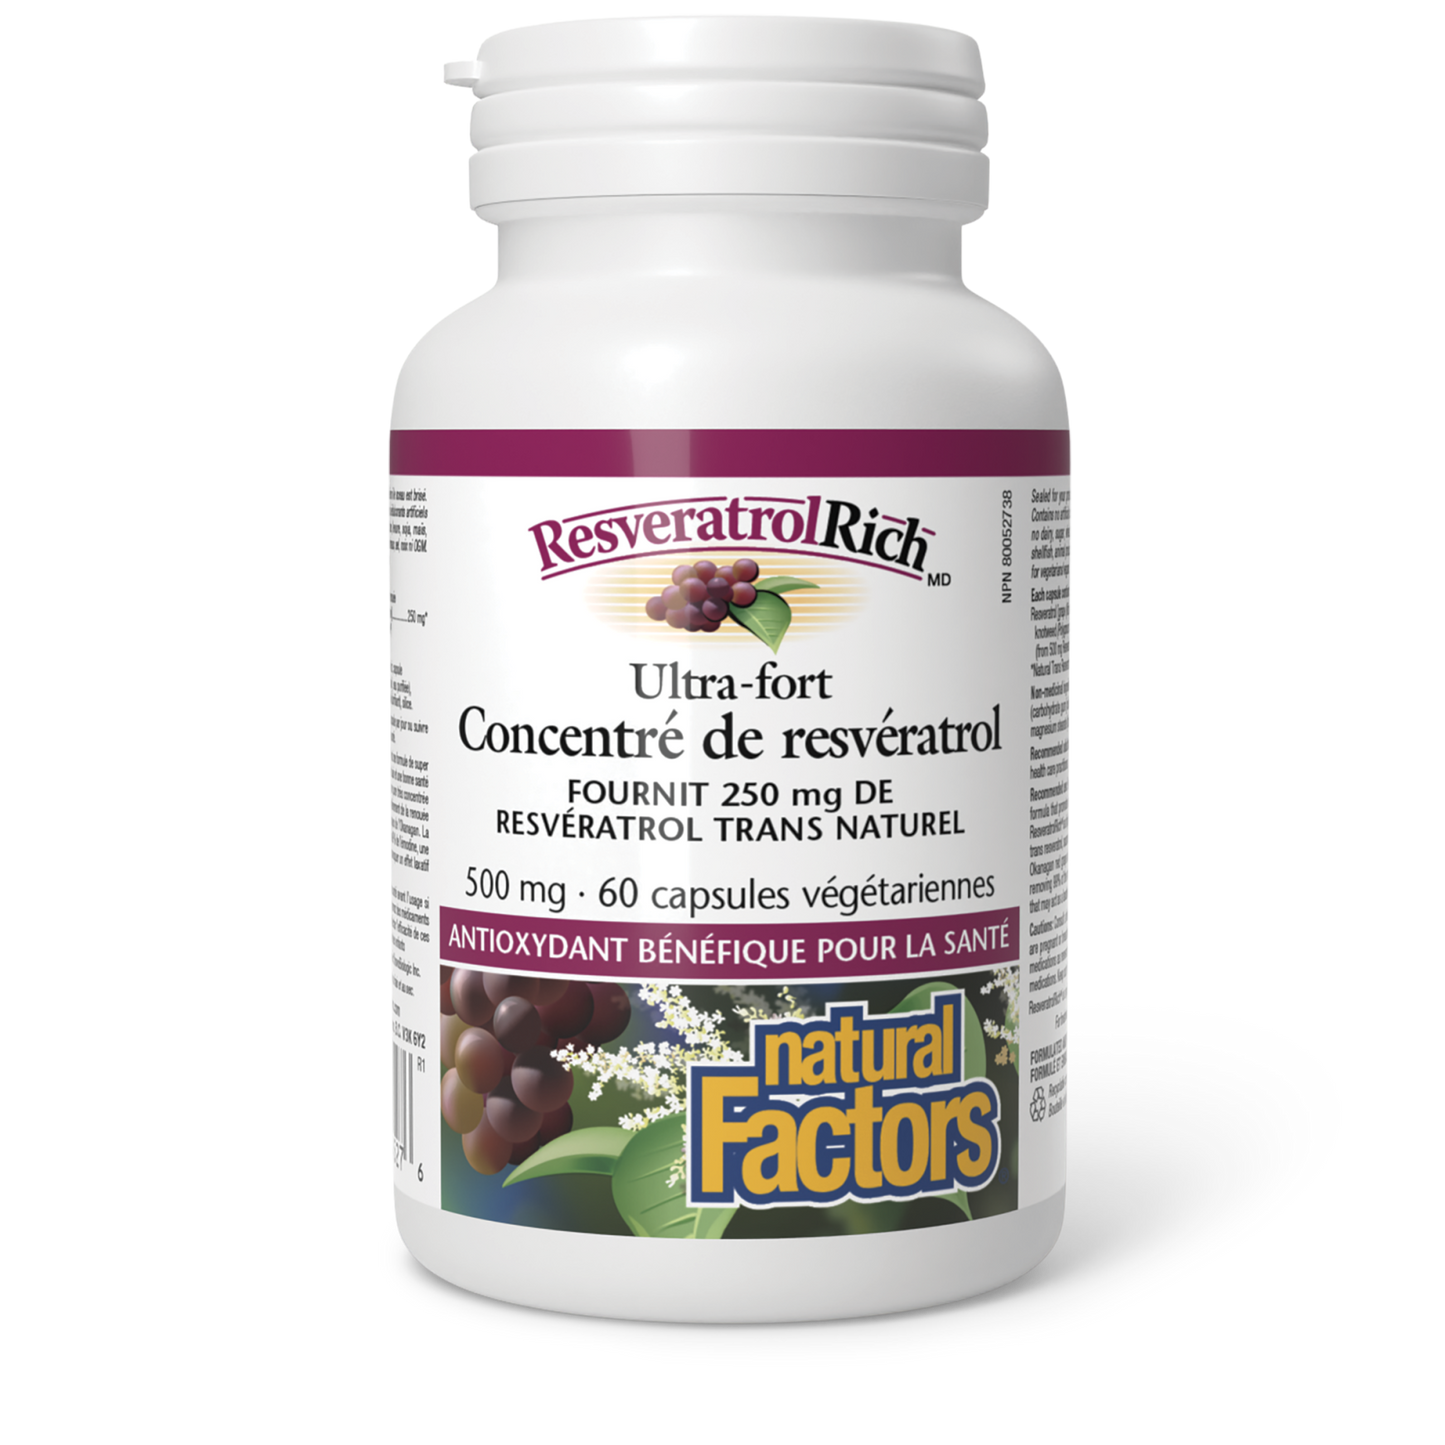 ResveratrolRich Ultra-fort Concentré de resvératrol 500 mg, Natural Factors|v|image|4527